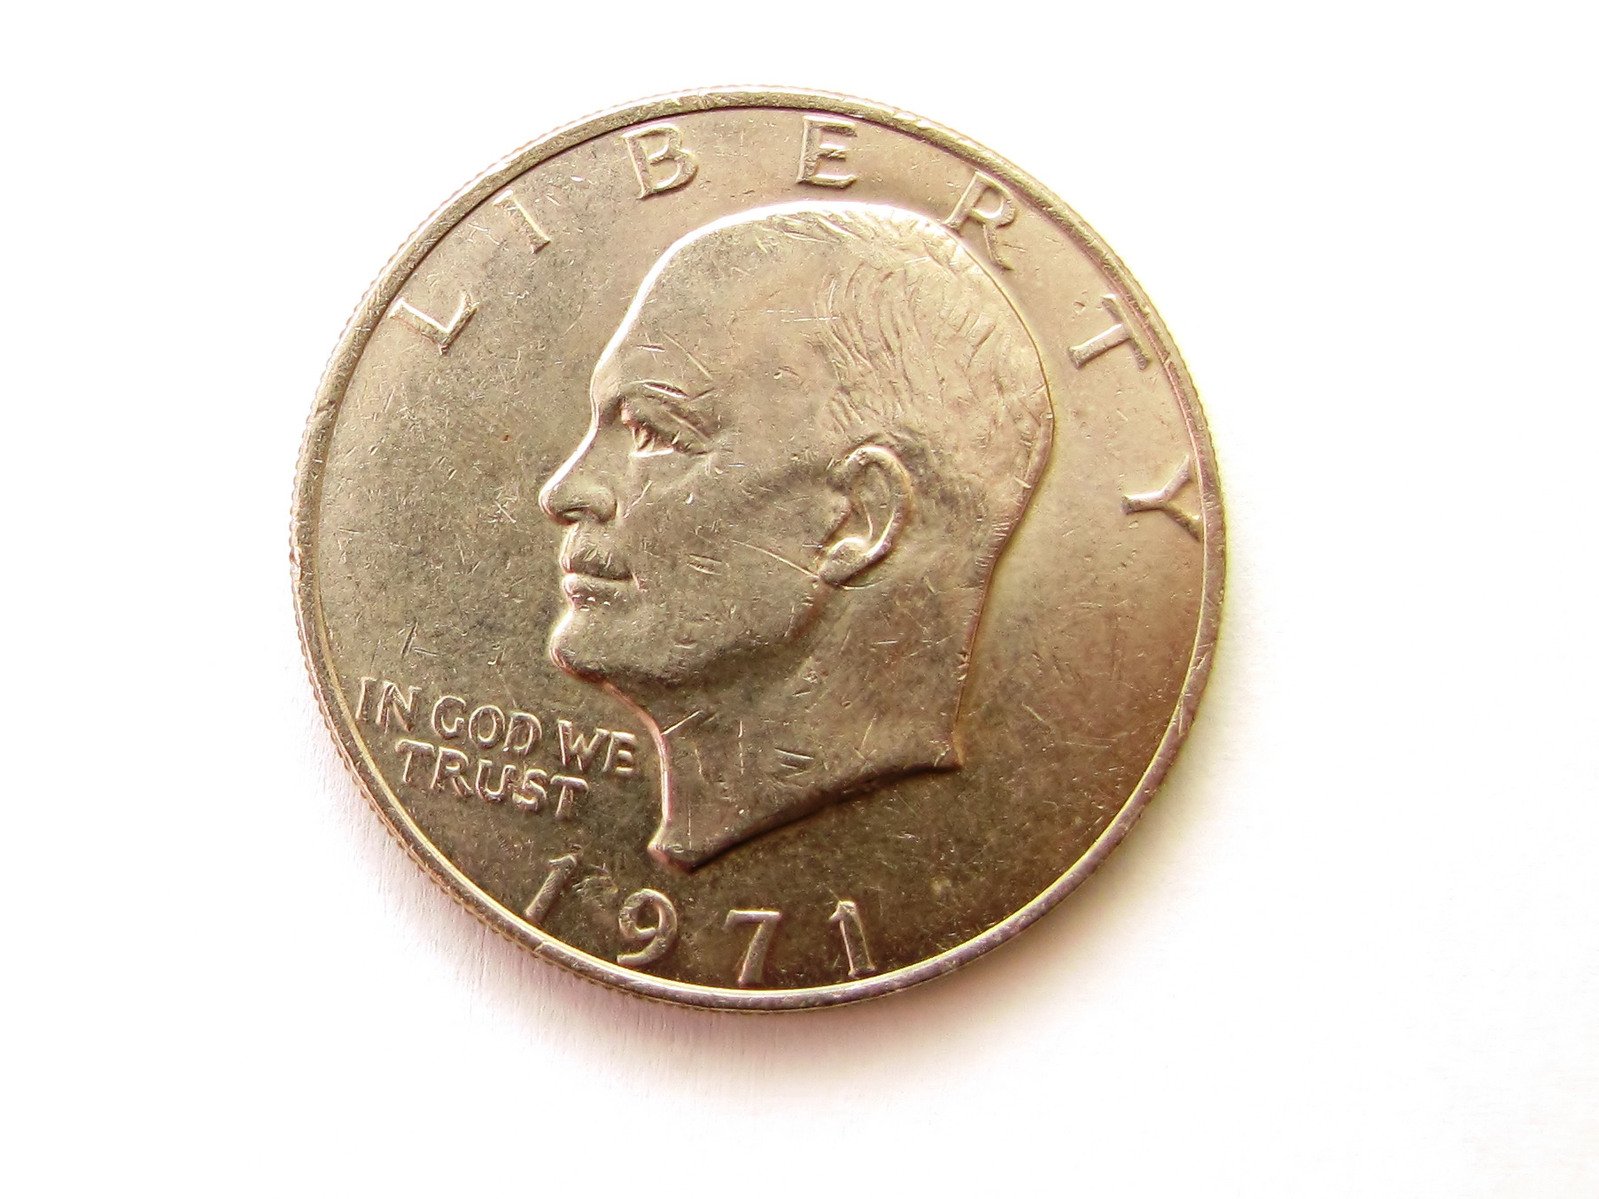 the front of an australian twenty dollar coin